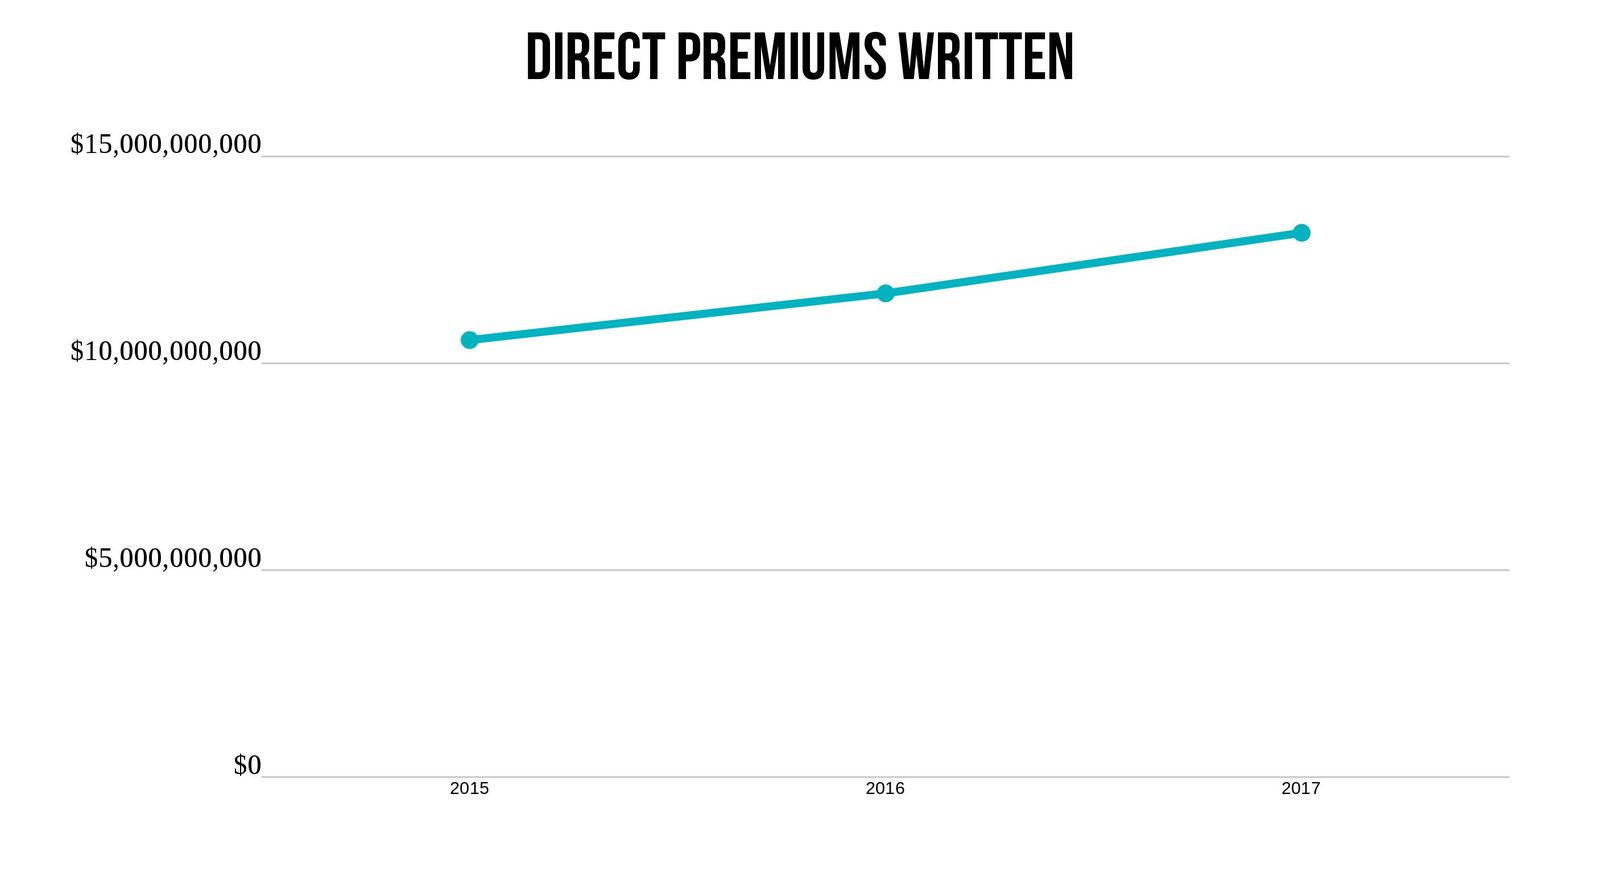 USAA premiums written trend